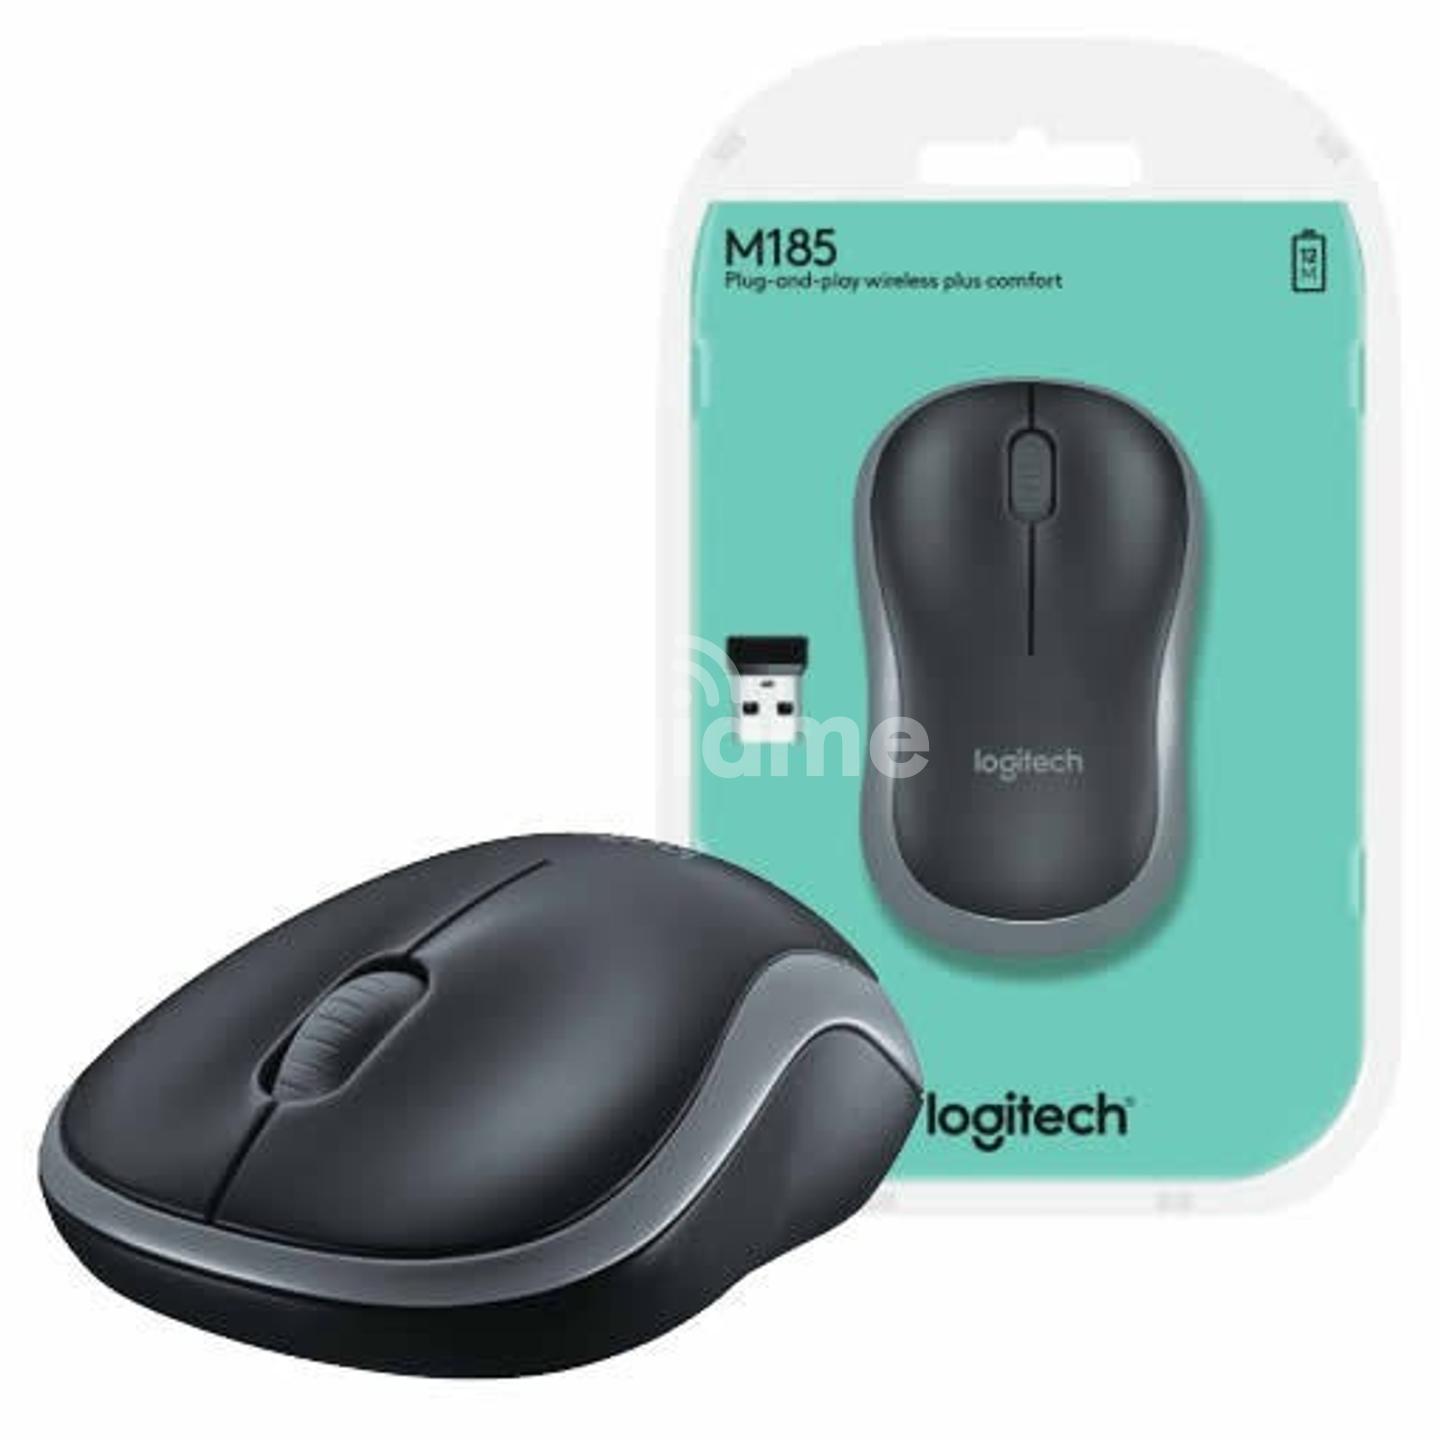  Logitech M185 Wireless Mouse, 2.4GHz with USB Mini